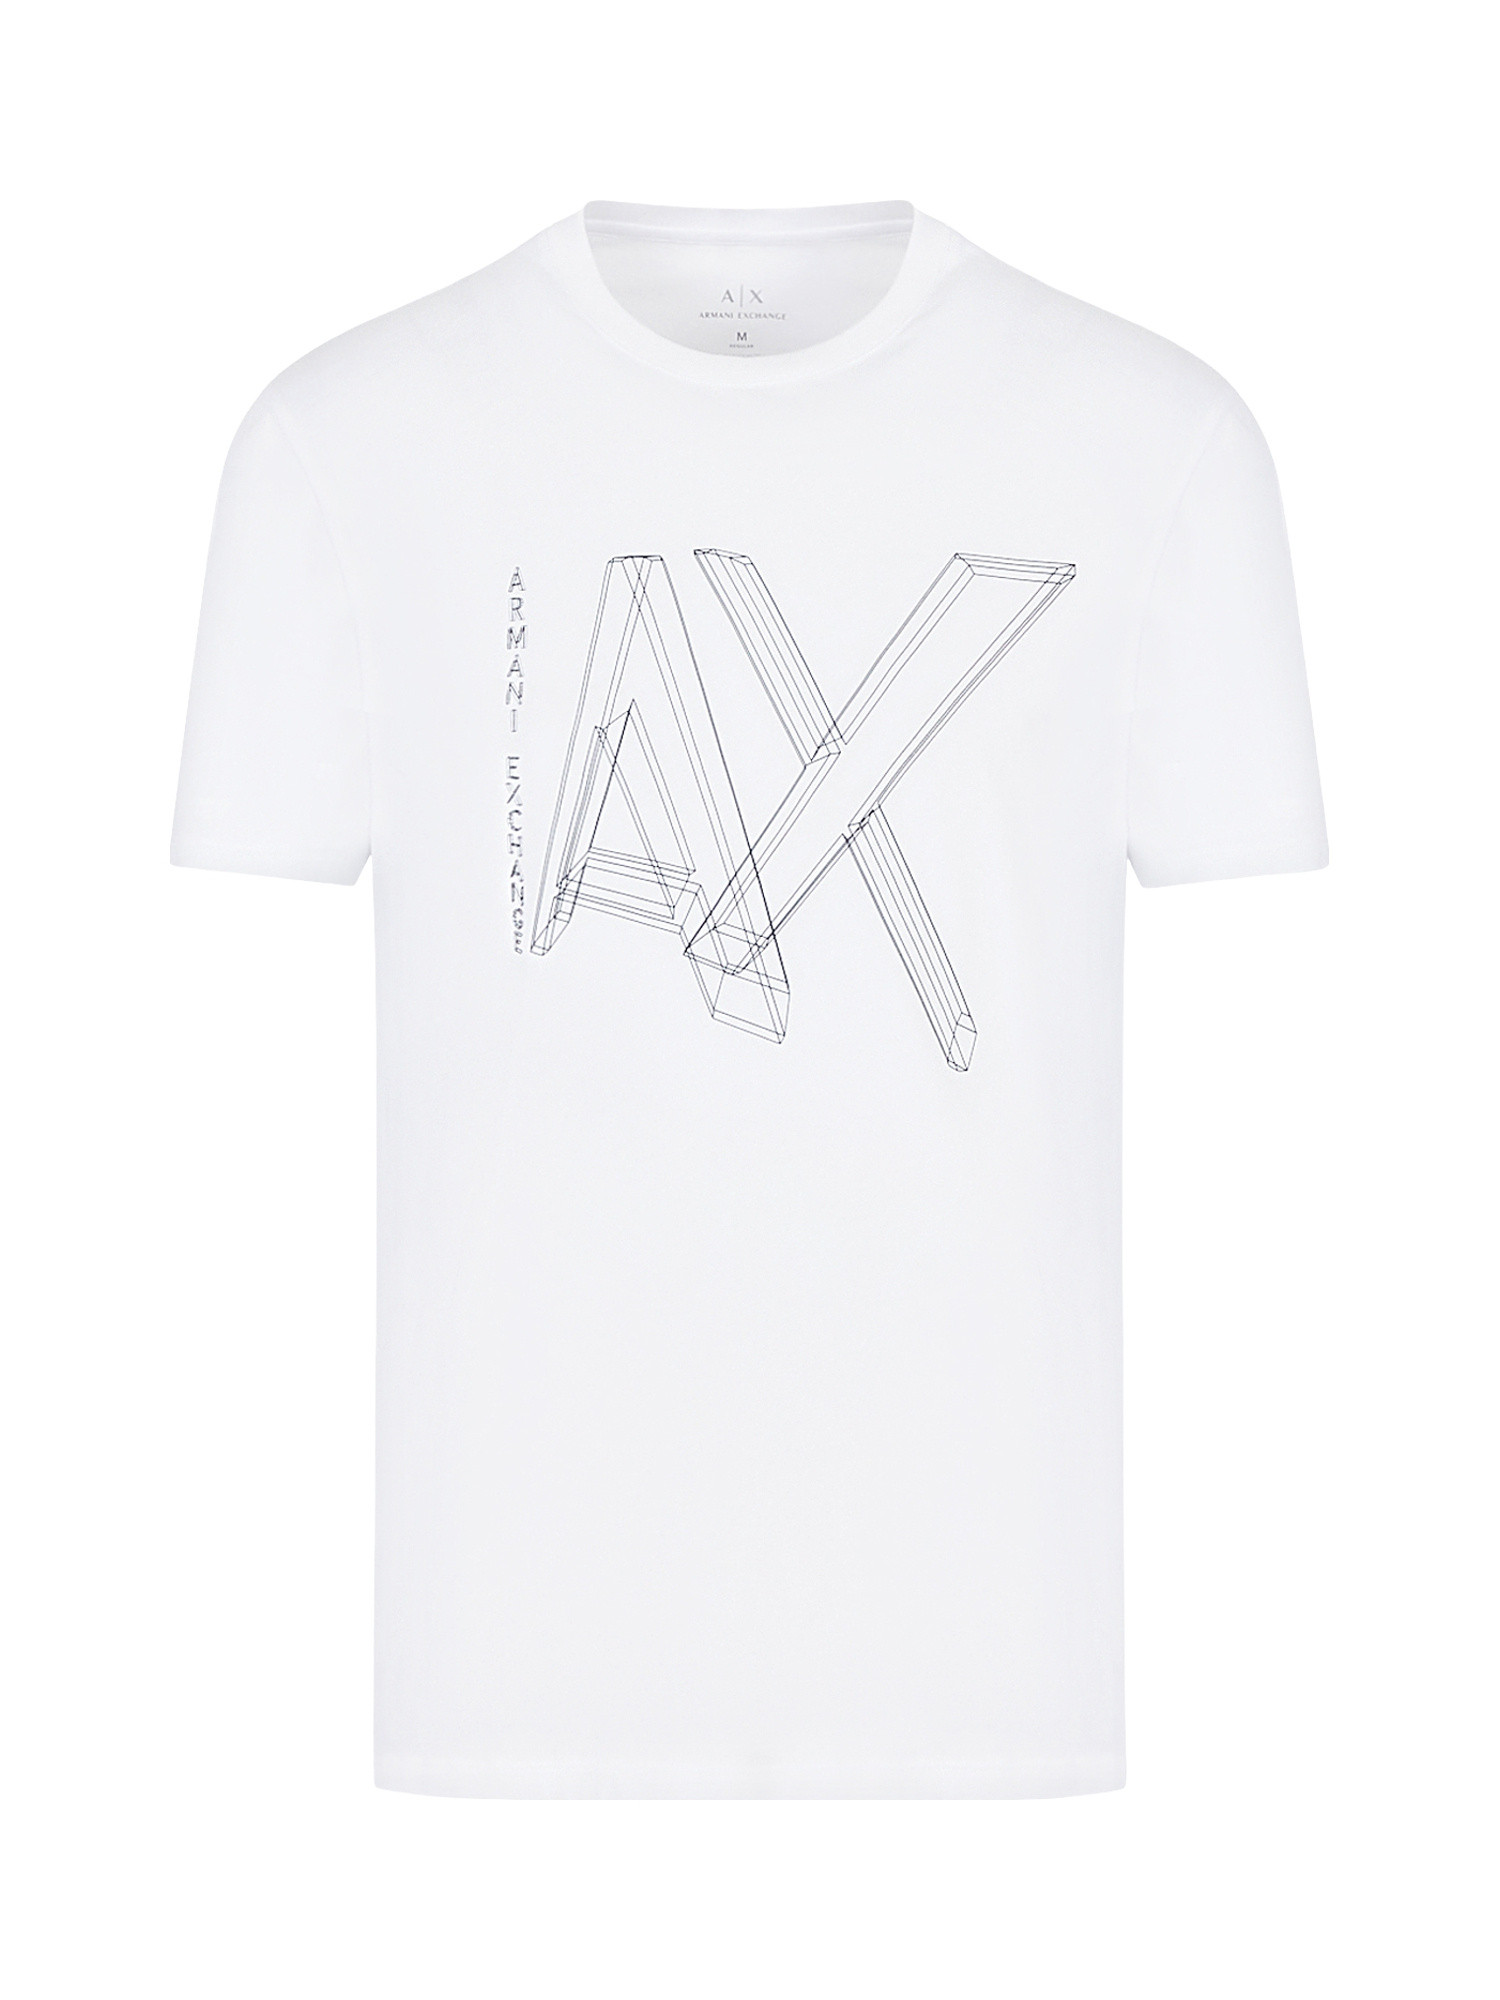 Armani Exchange - Regular fit cotton T-shirt with logo, White, large image number 0